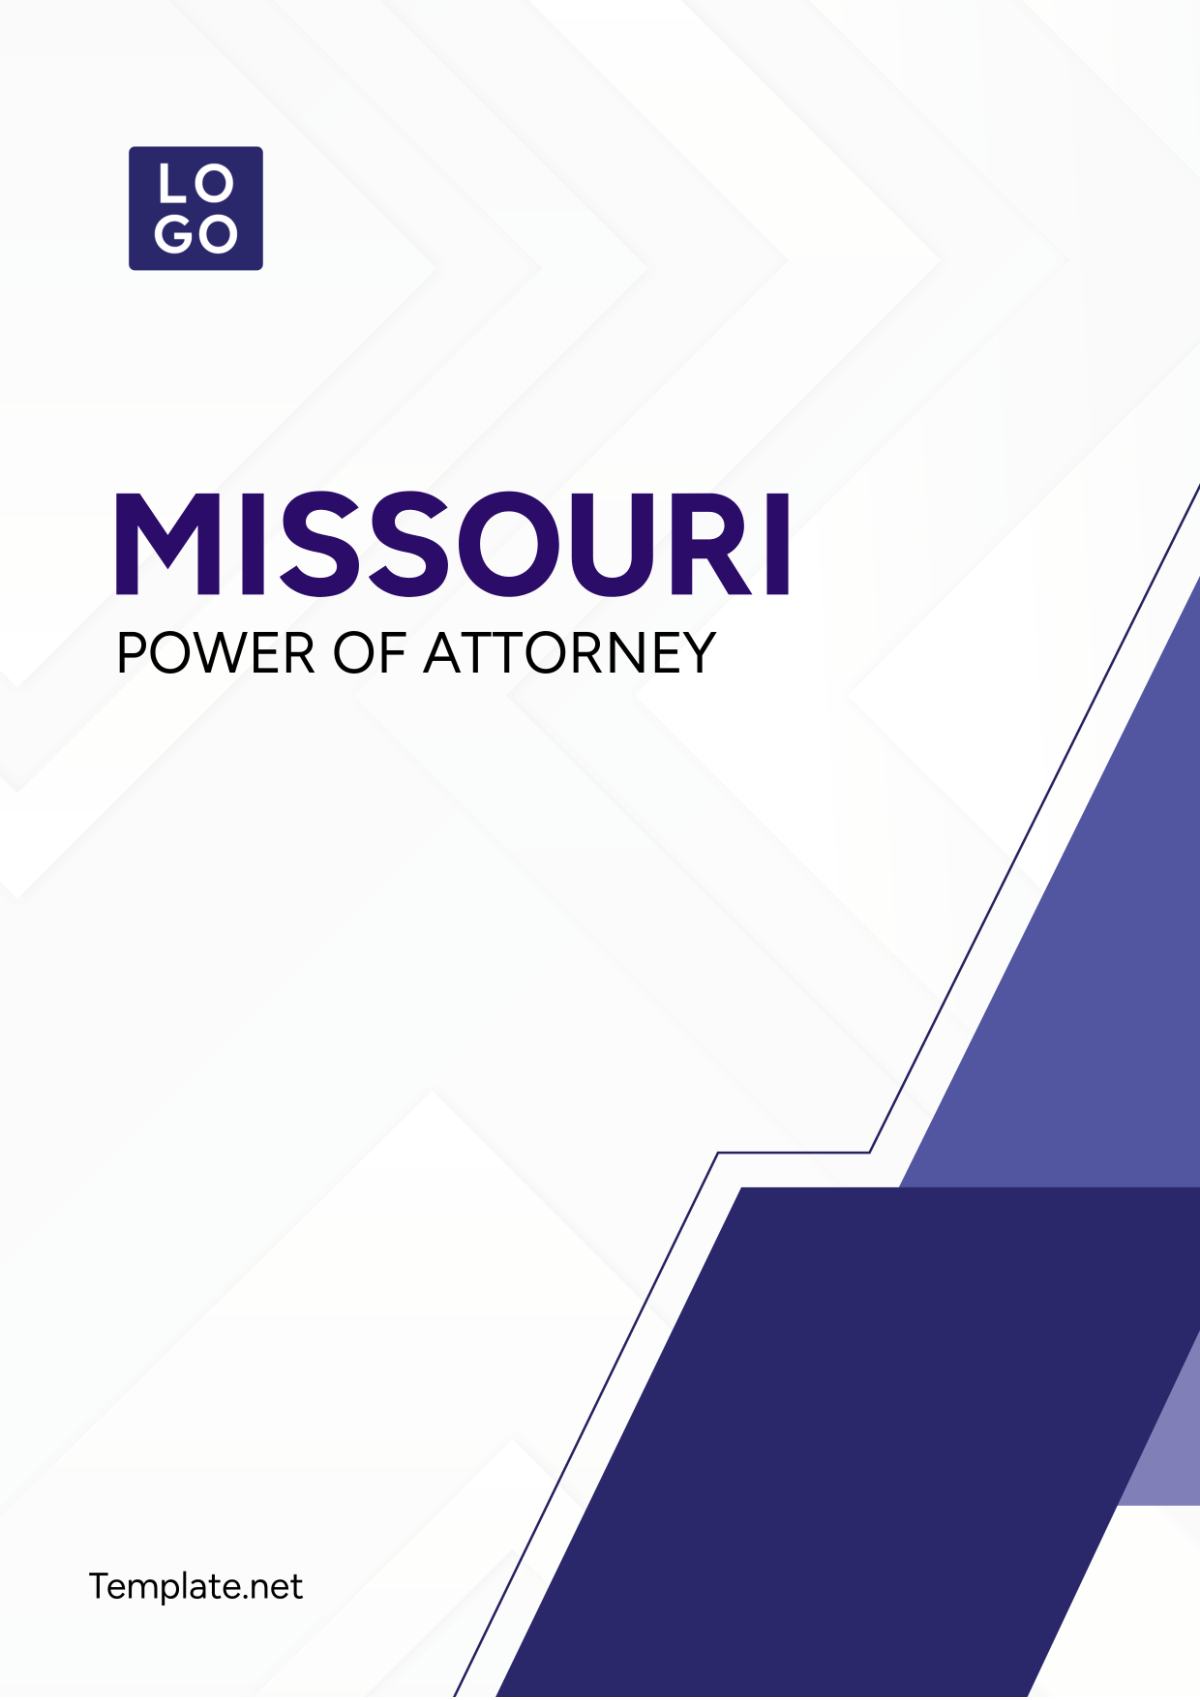 Missouri Power of Attorney Template